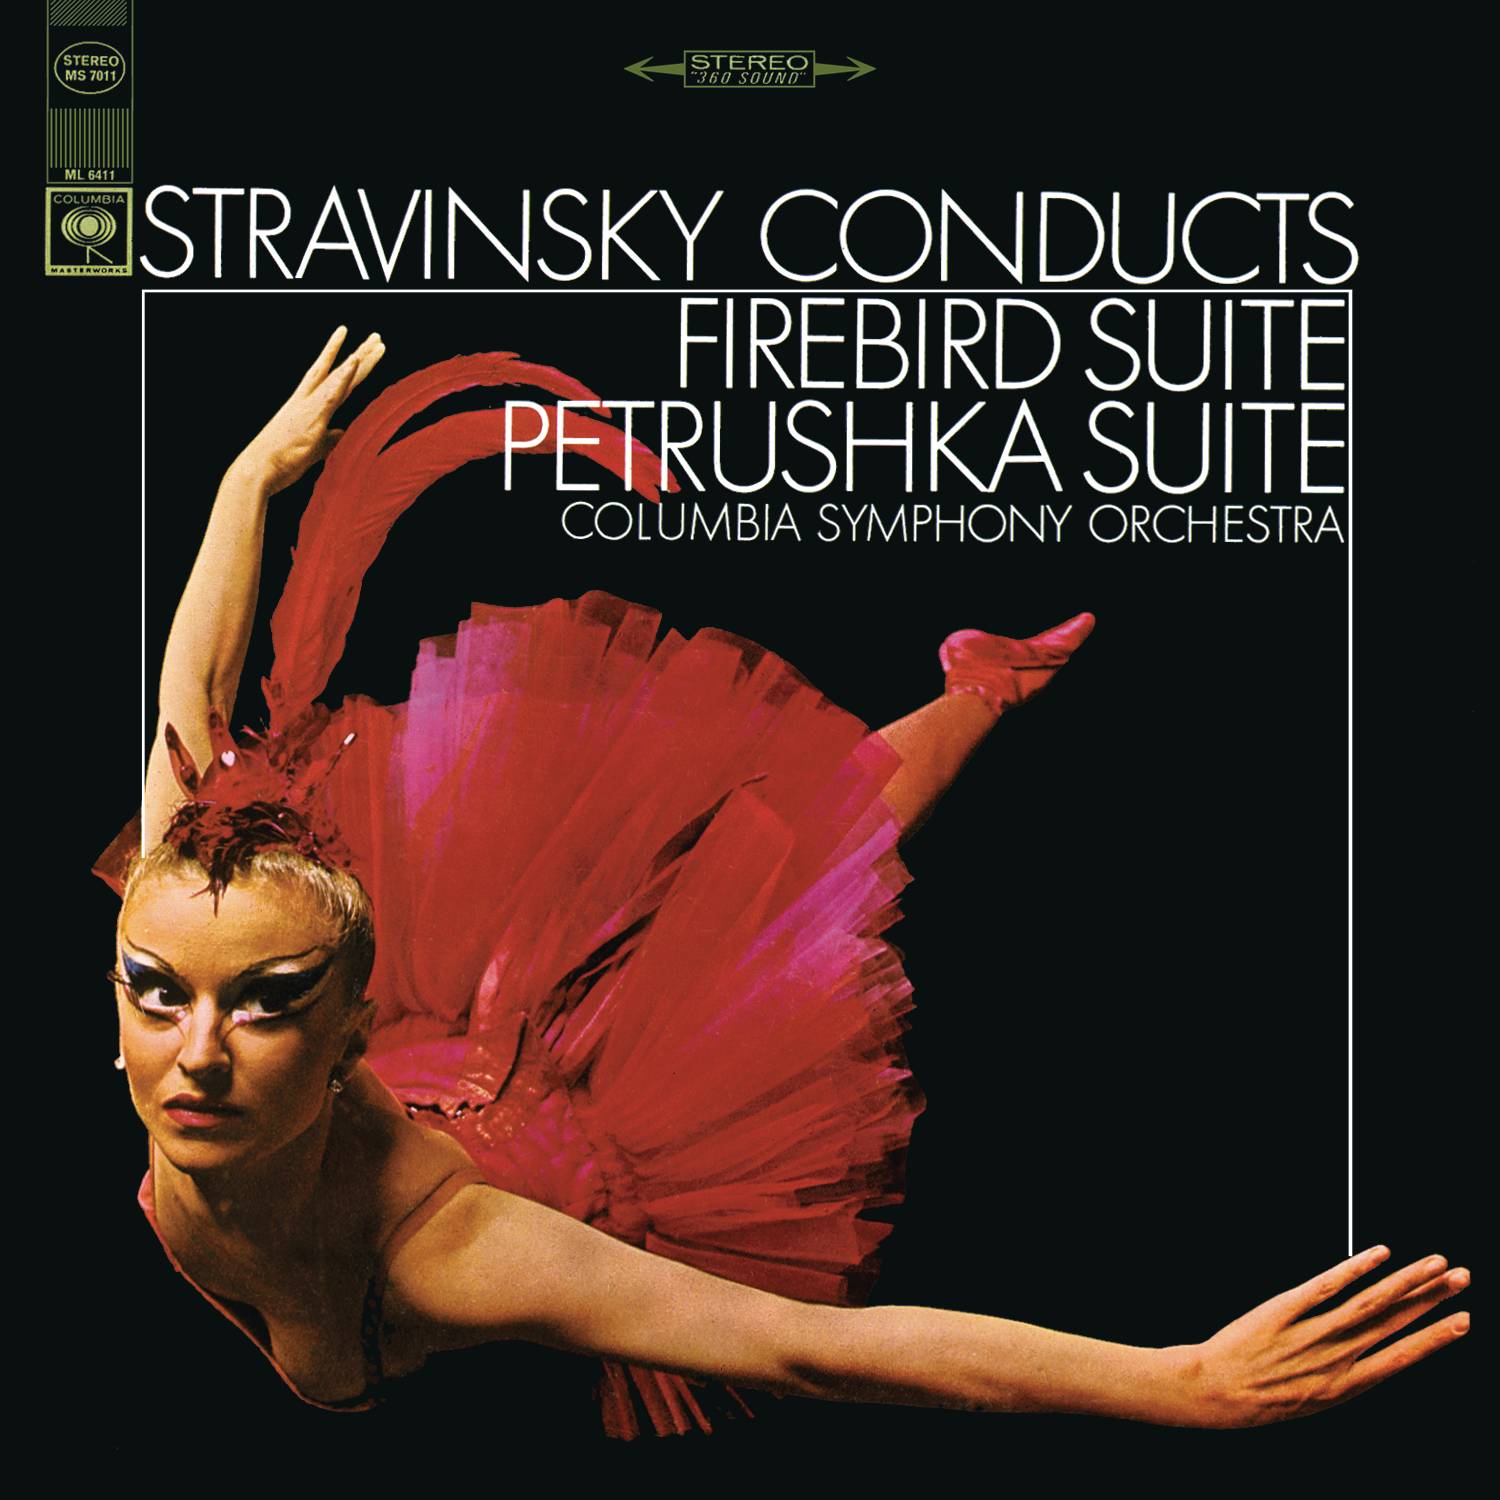 Petrushka Suite:The Crowds